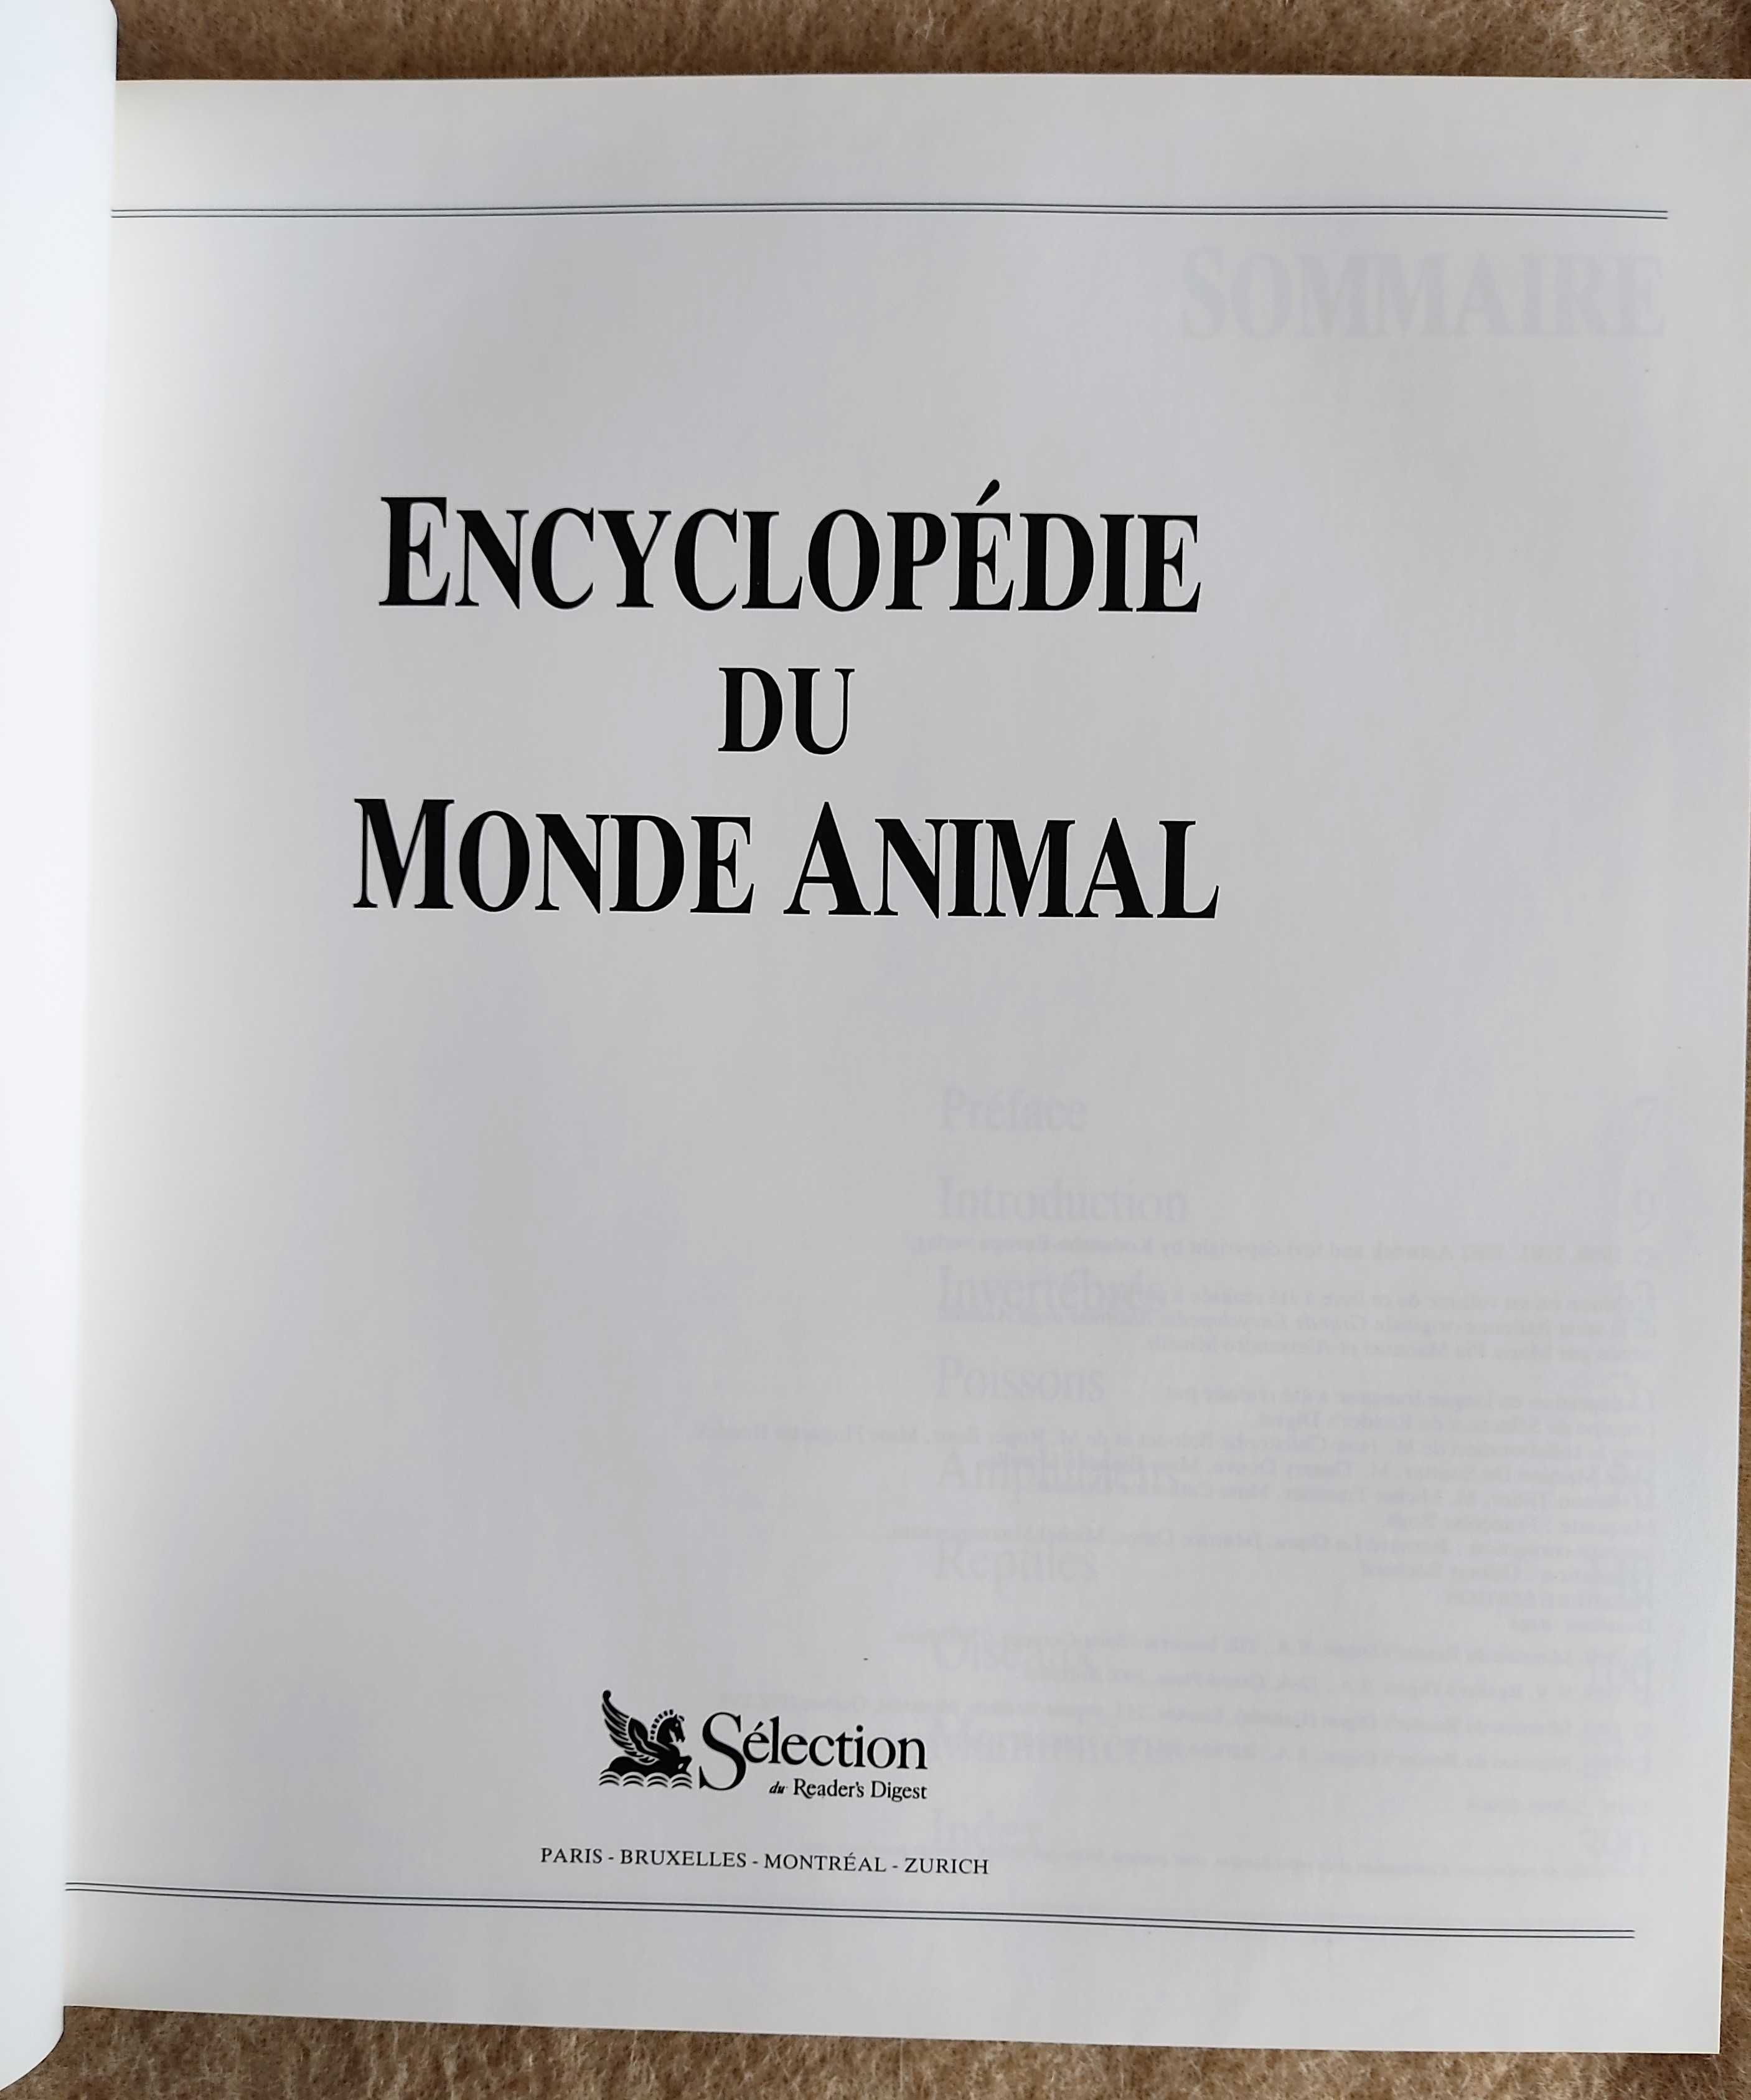 Encyclopedie du Monde Animal, encyklopedia zwierząt po francusku